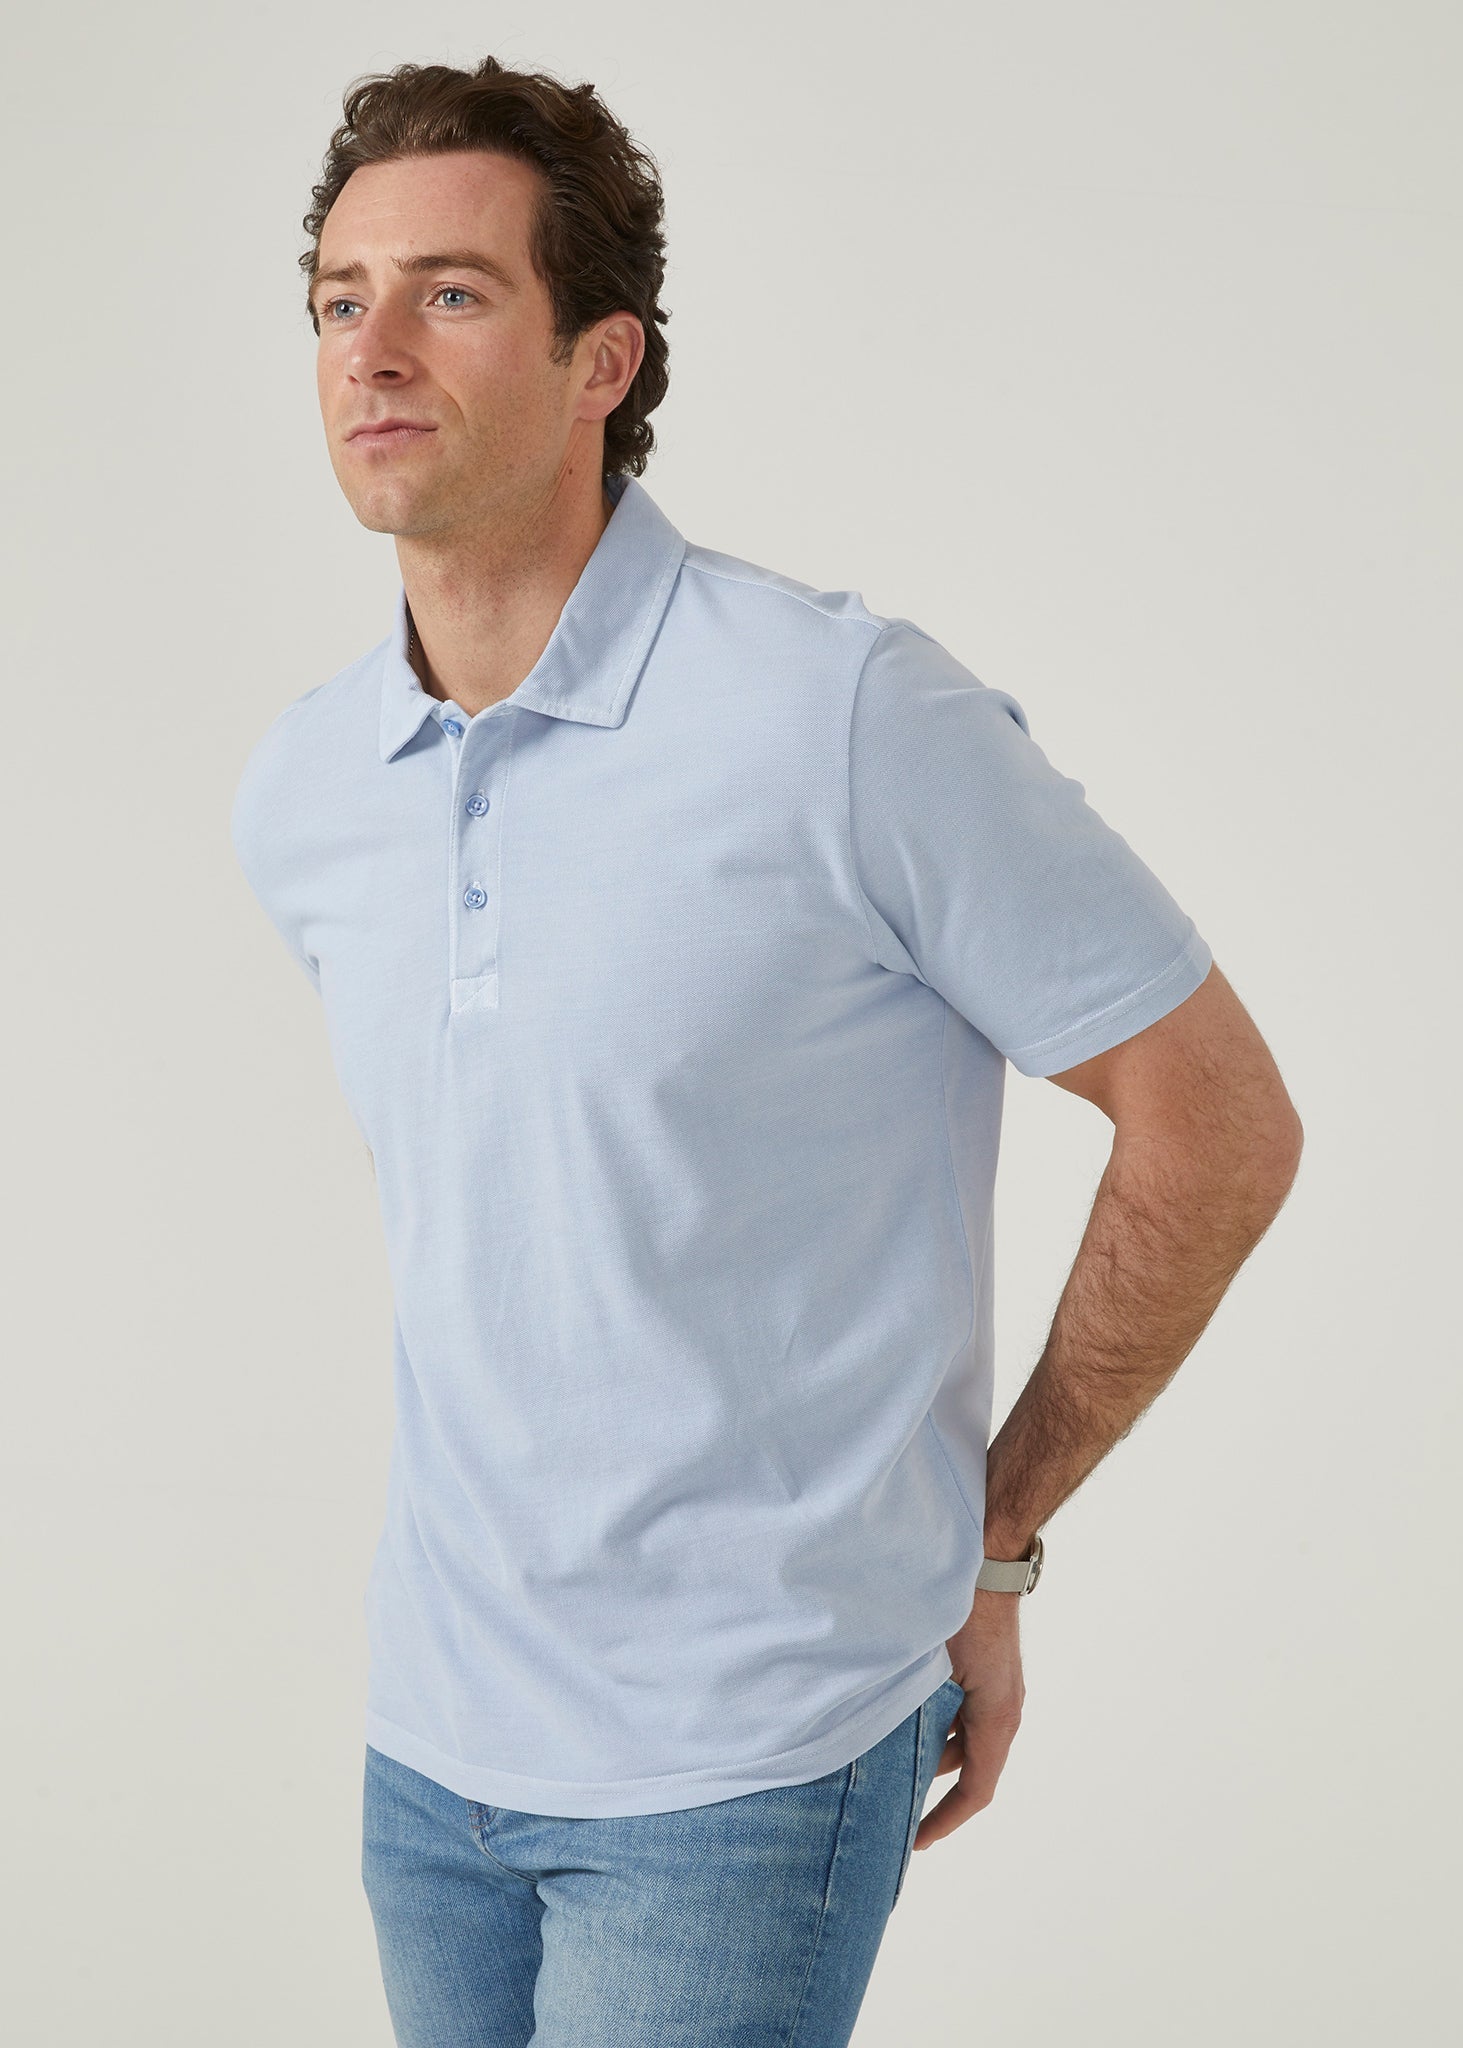 Light blue short sleeve polo shirt made from peruvian cotton.